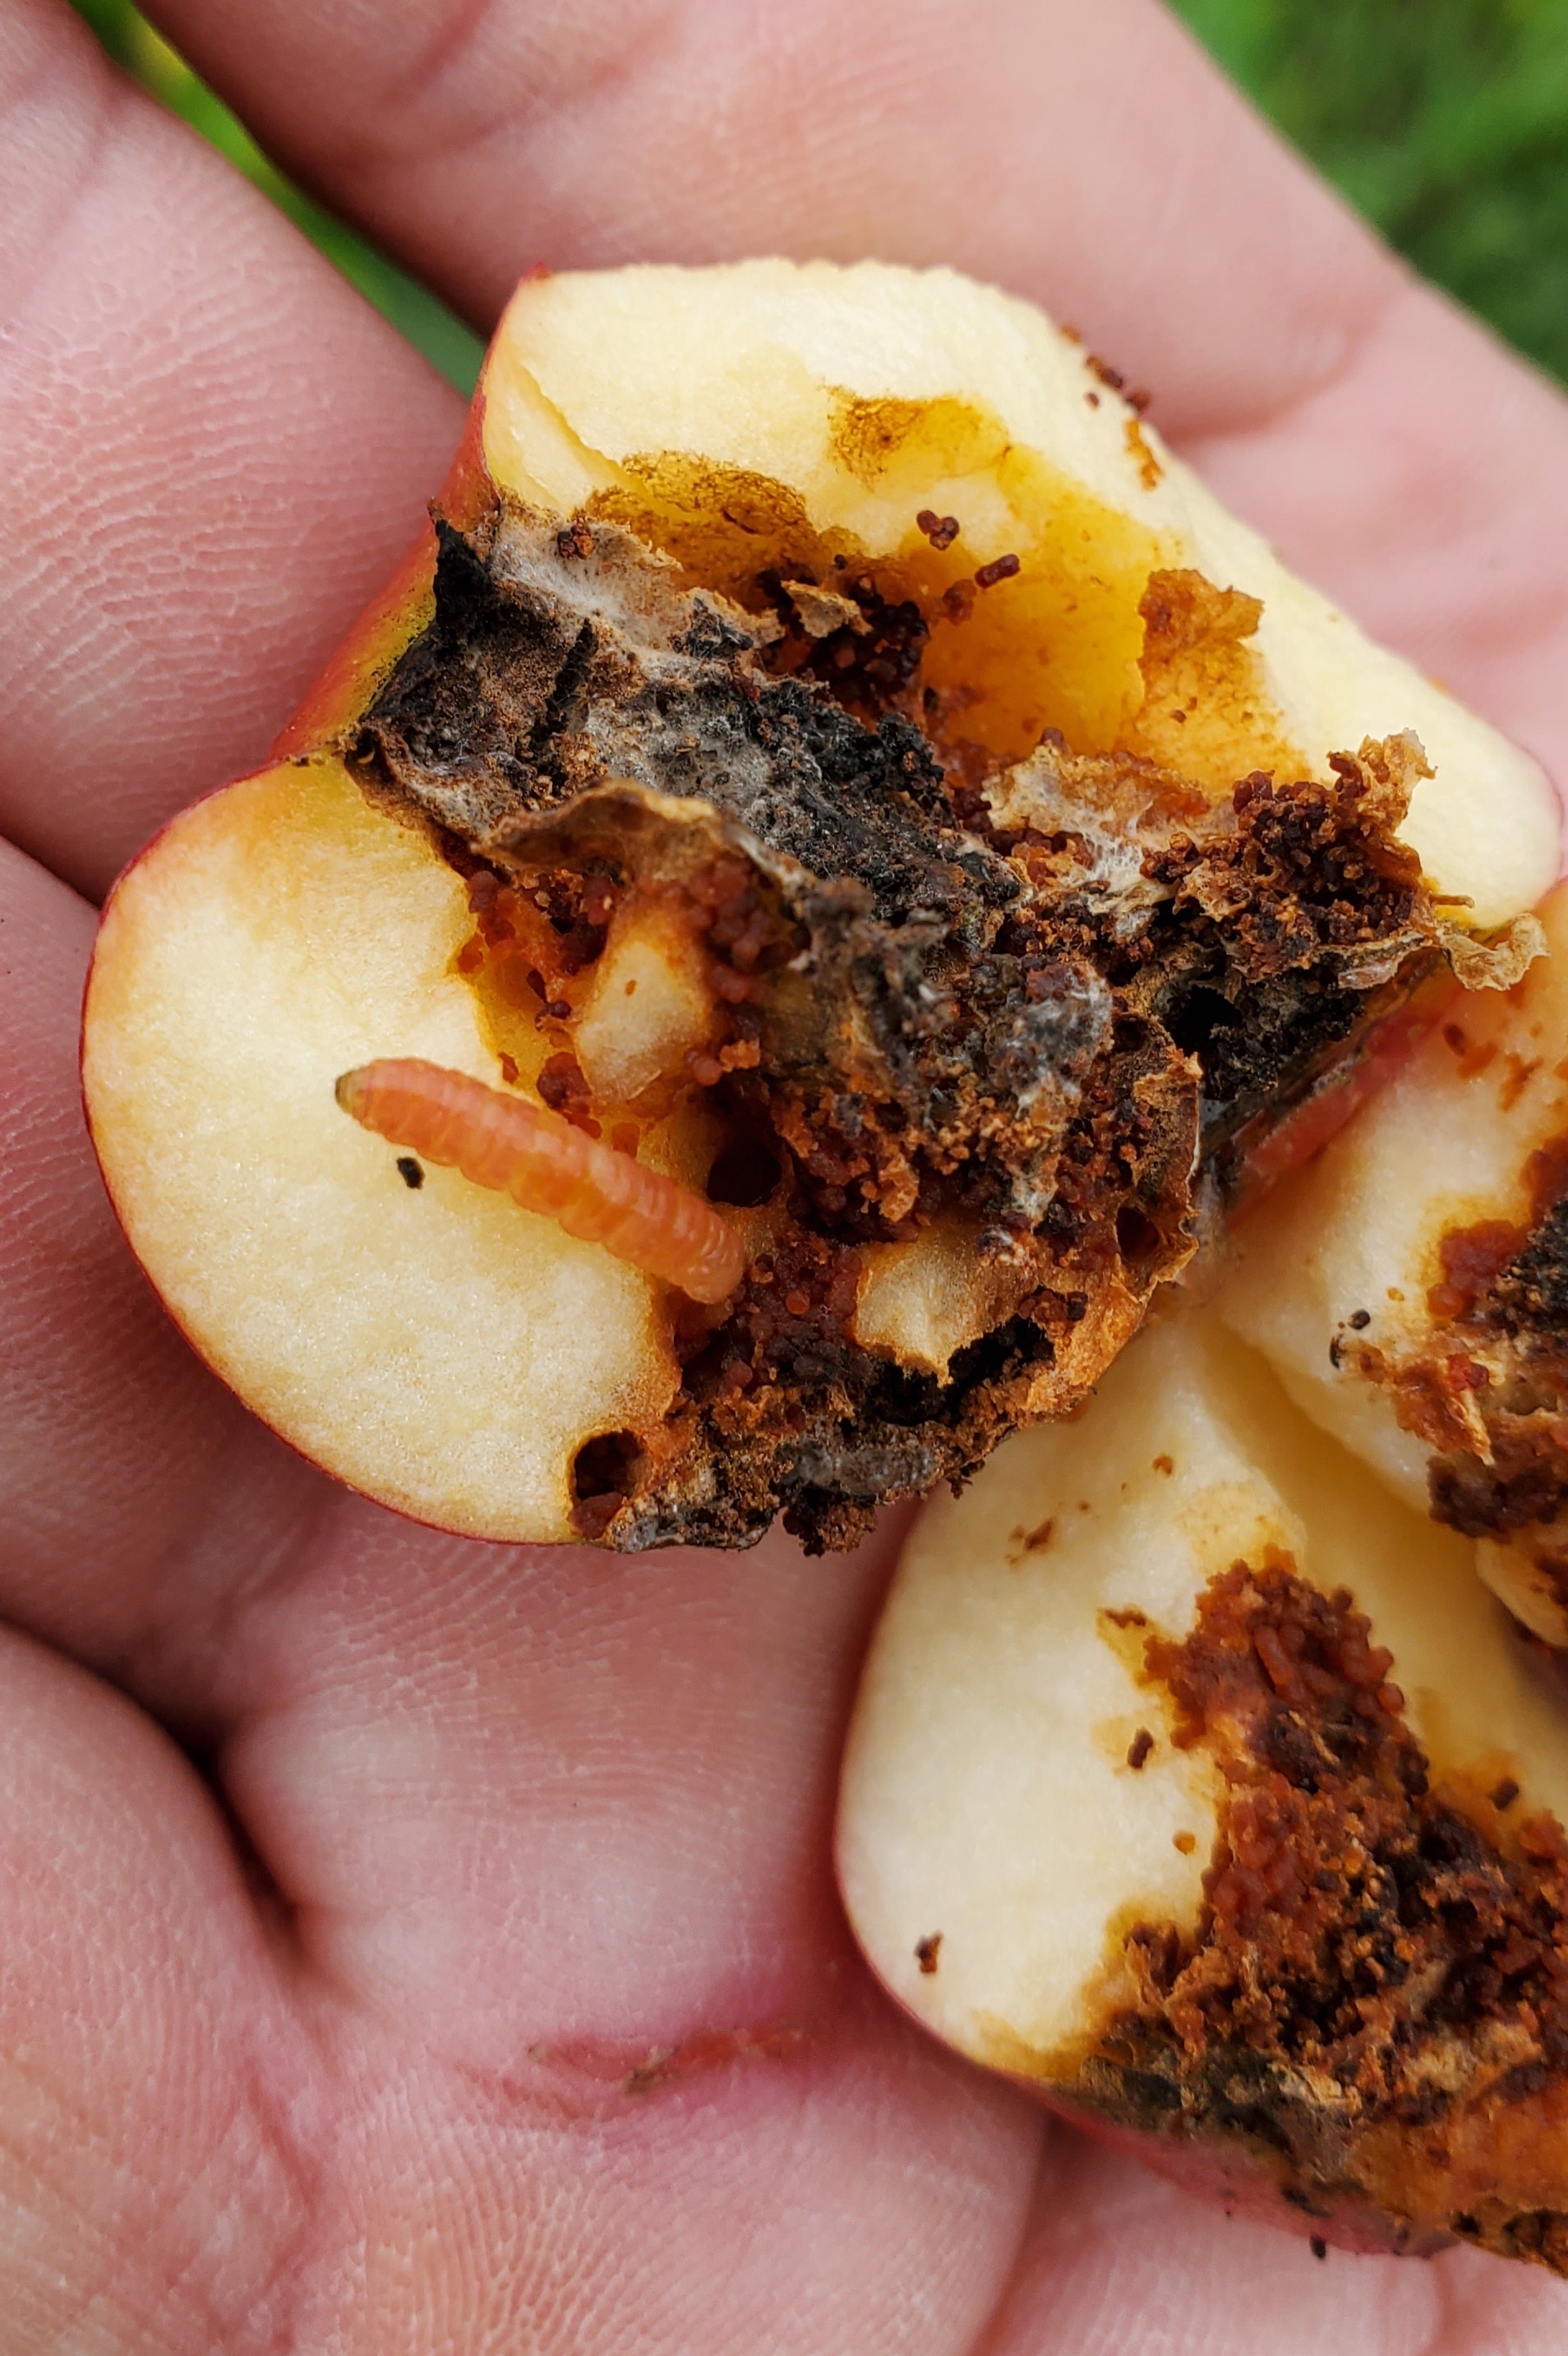 Codling moth pupa inside an apple core.